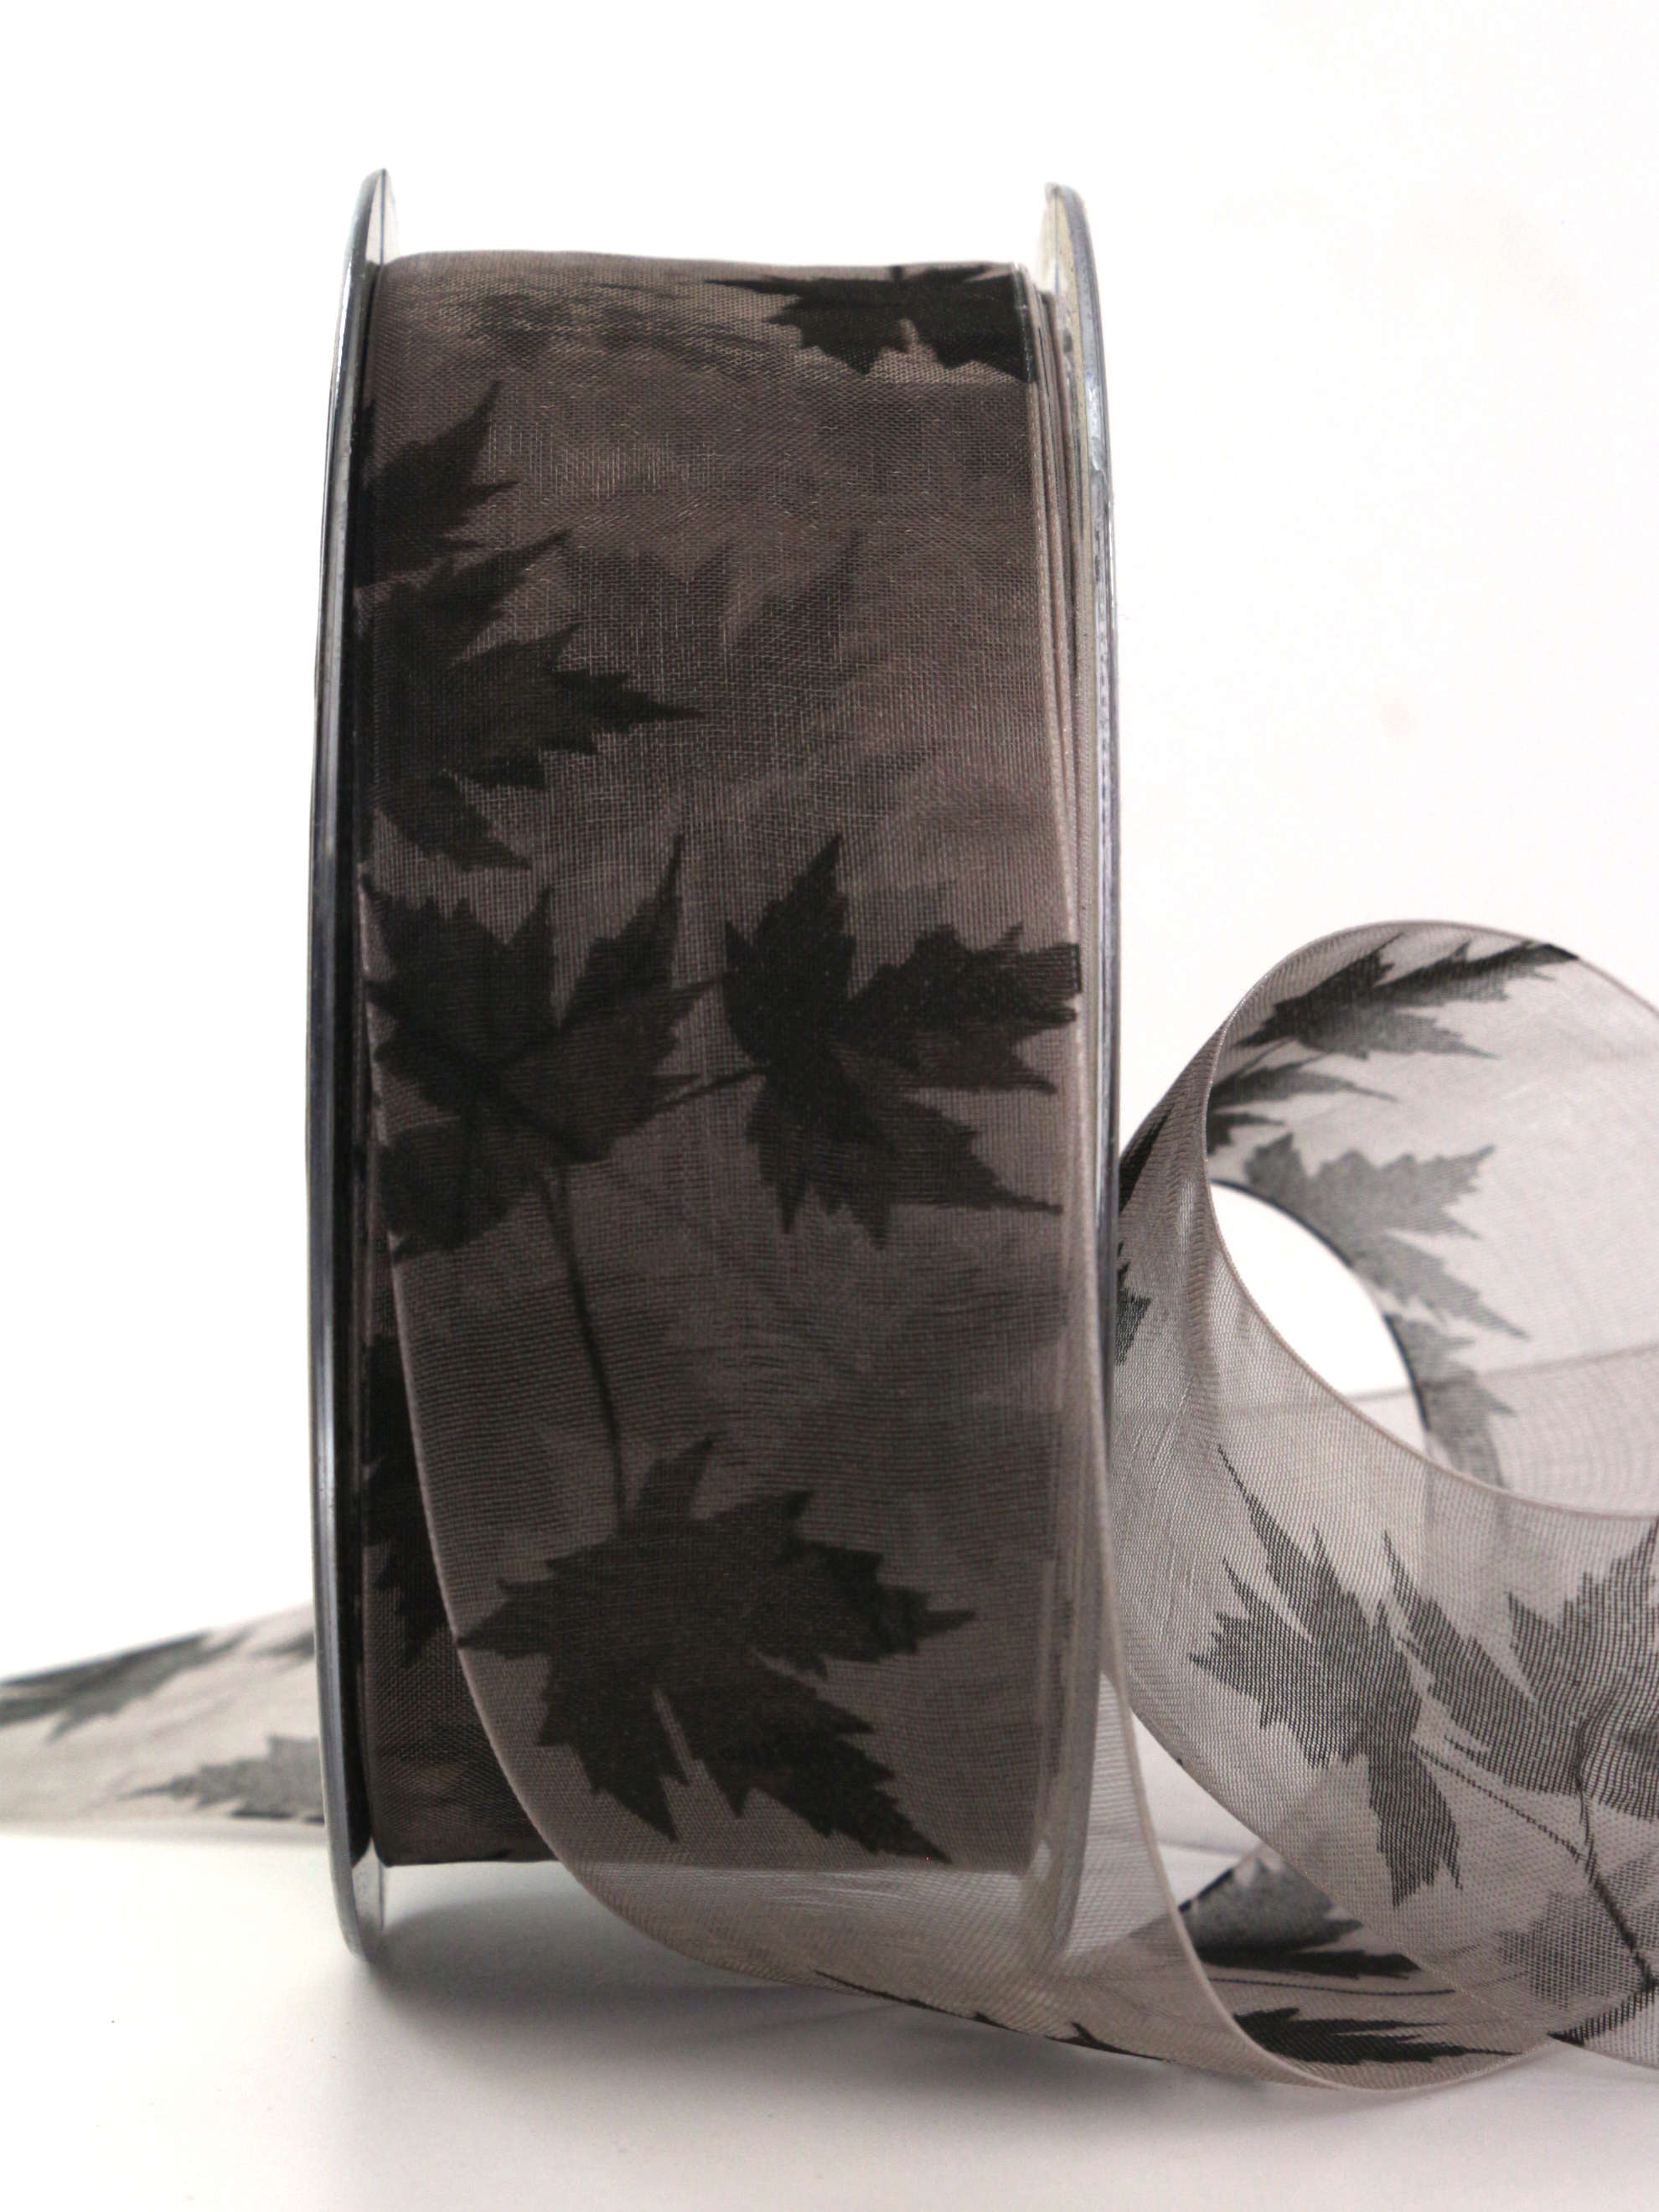 Trauerflor Laub, grau, 40 mm breit, 20 m Rolle - trauerflor, trauerband